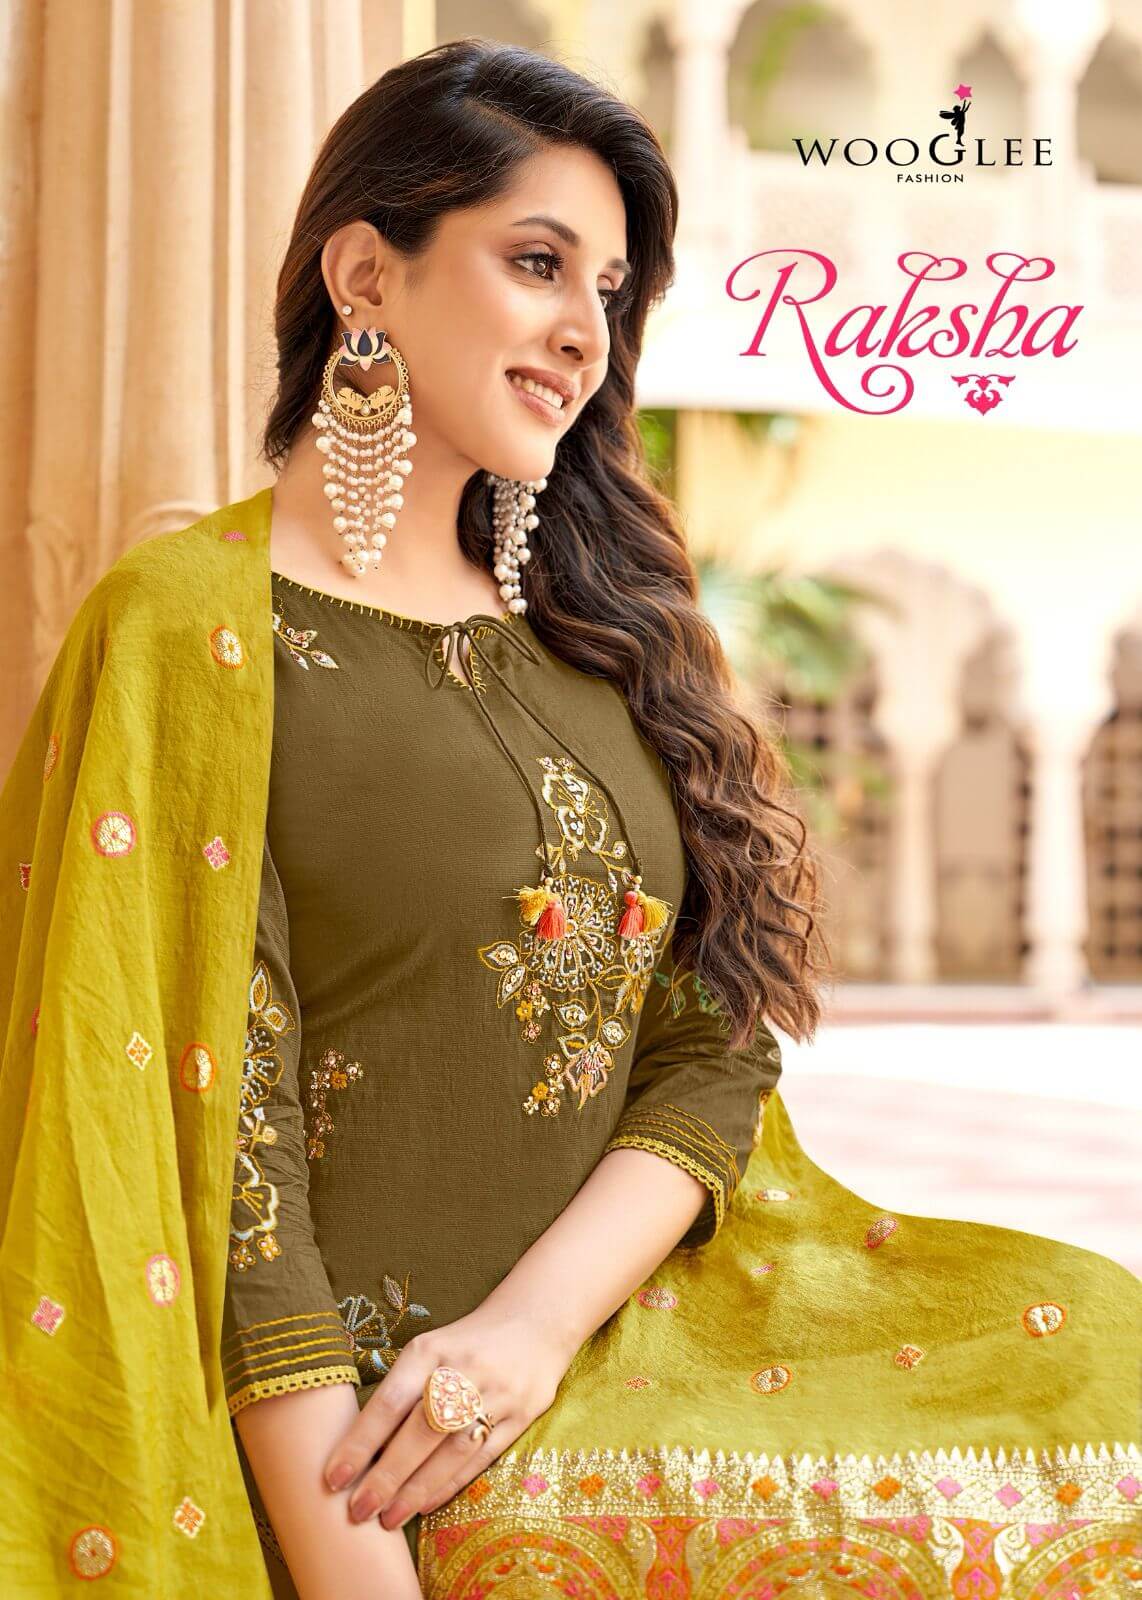 Wooglee Fashion Raksha Churidar Salwar Suits Catalog collection 11